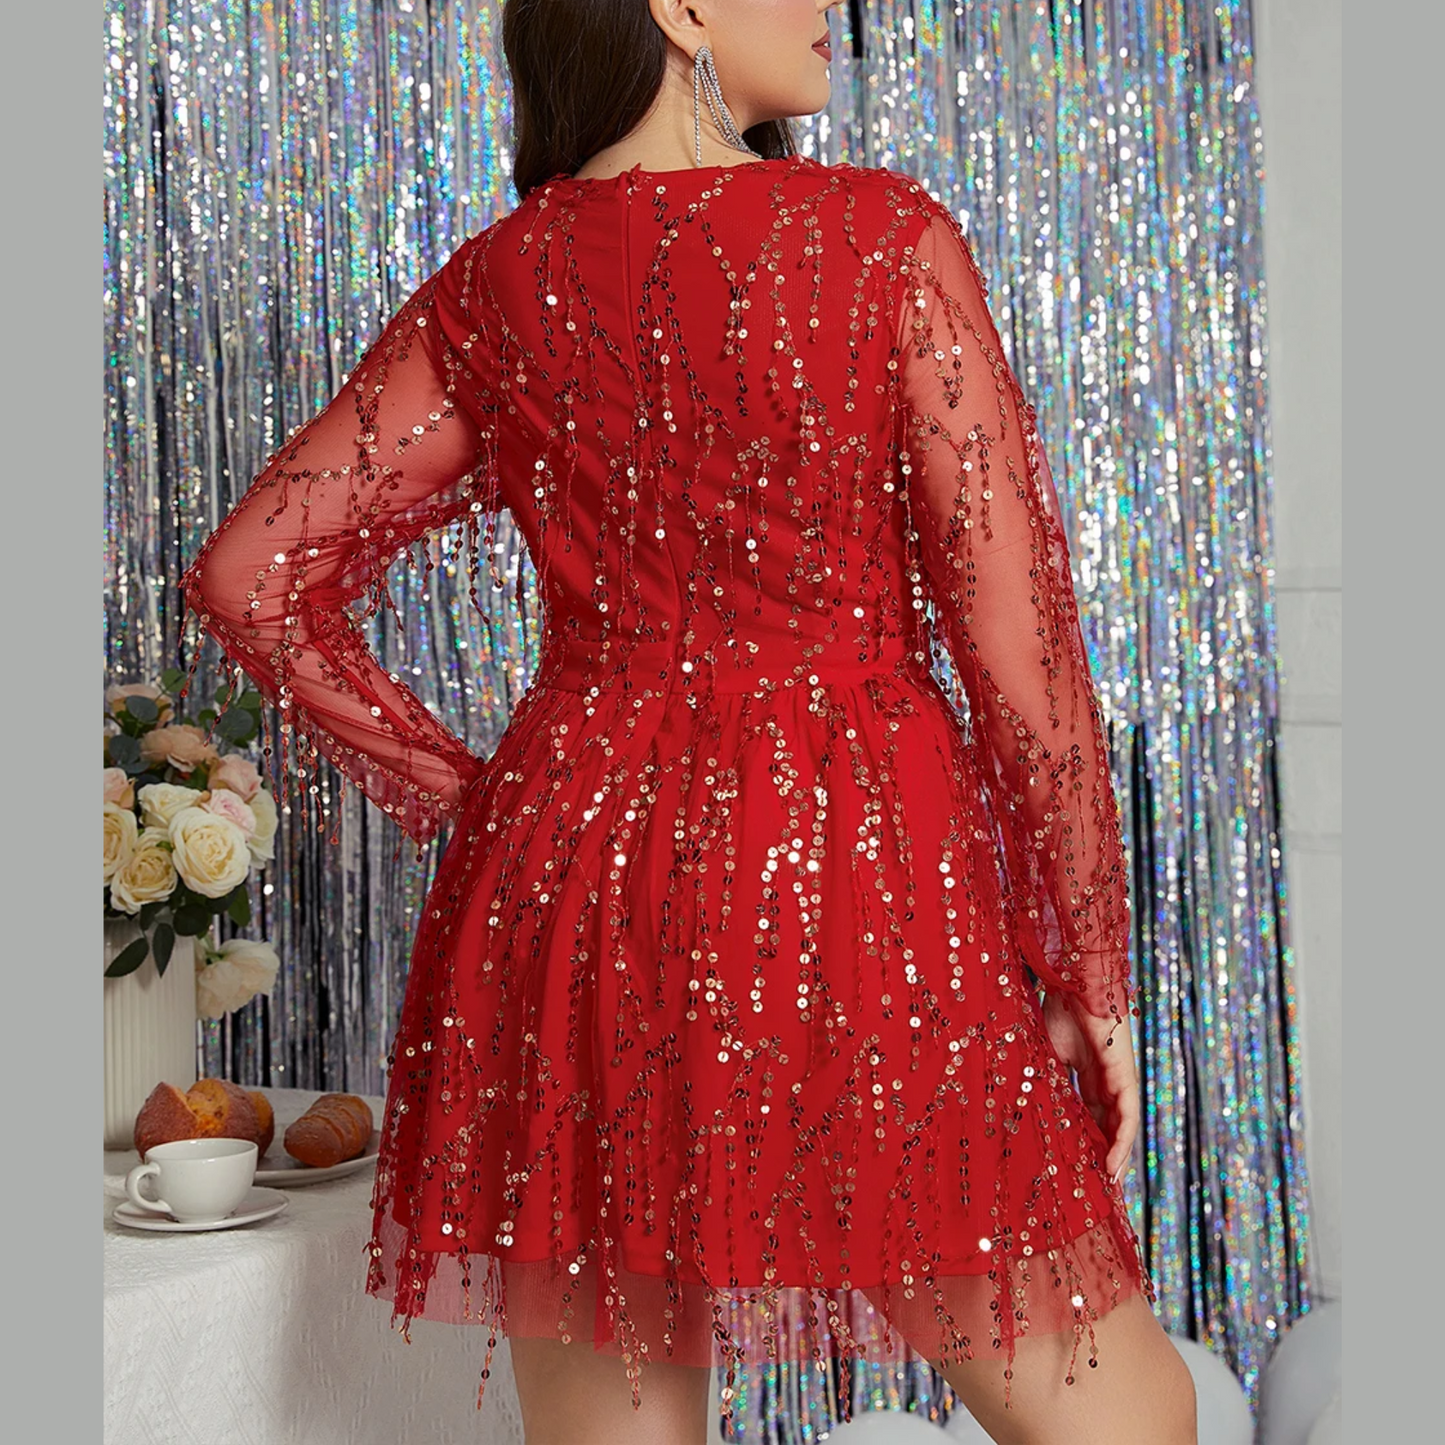 Senorita - Red Plus Size Sequin Embellished Midi Dress